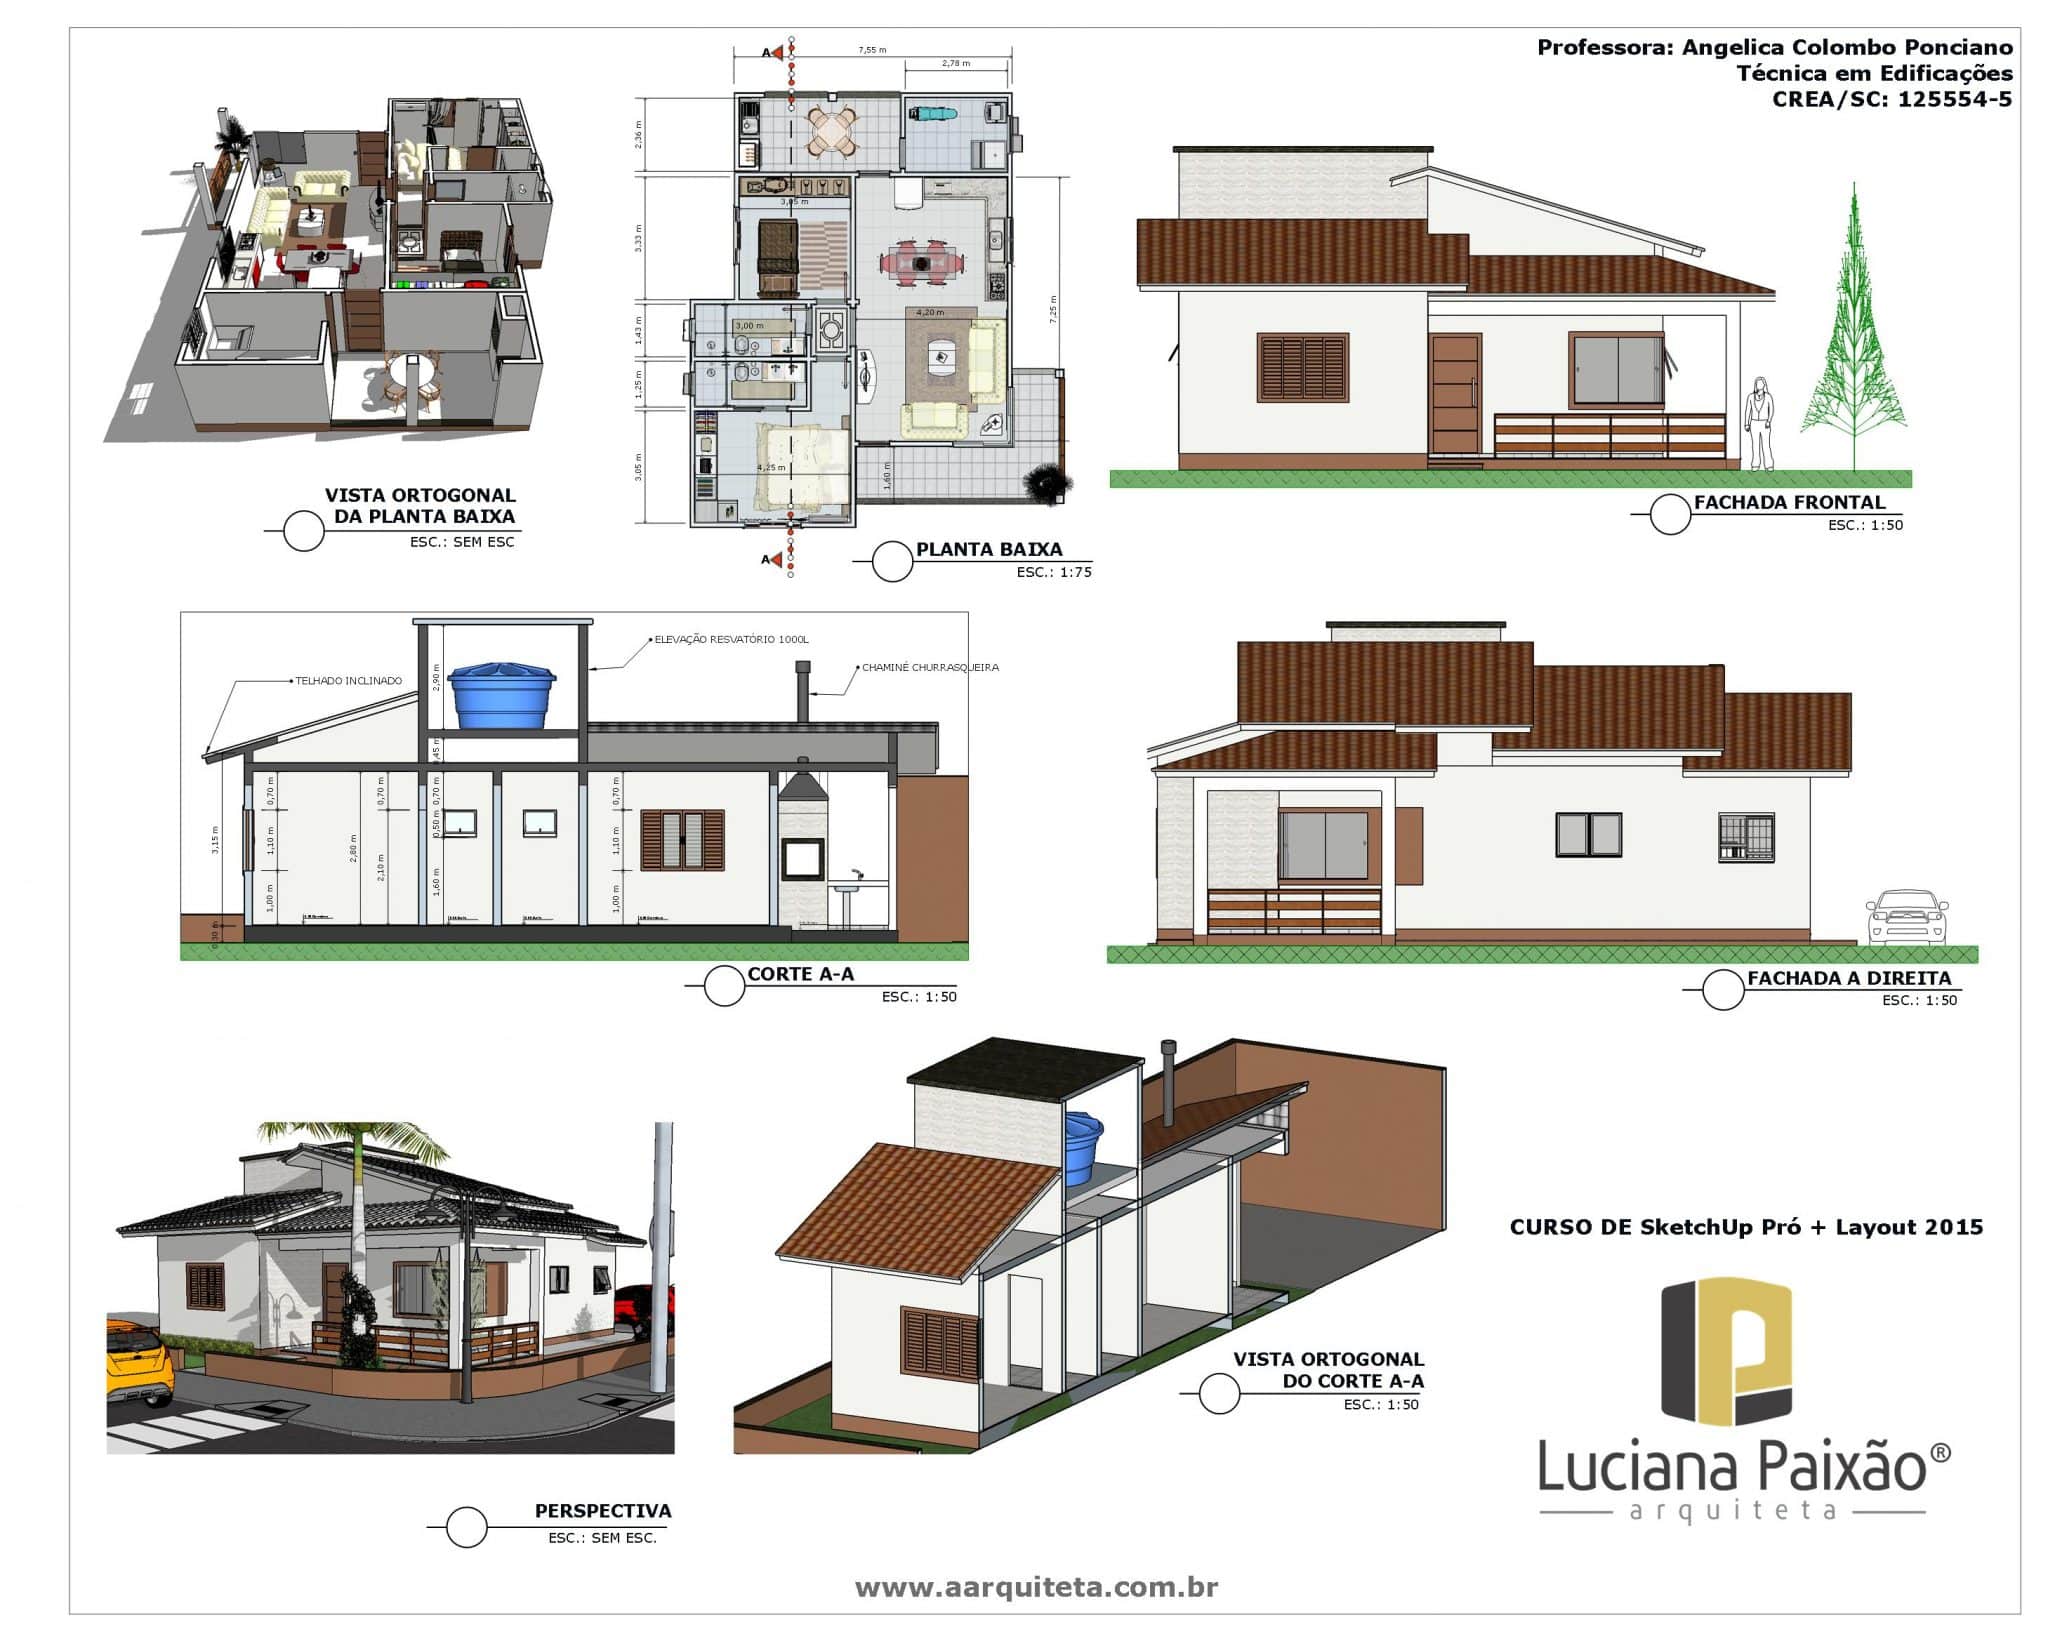 Projeto Casa da Angelica Colombo Ponciano Layout 2015_1_1